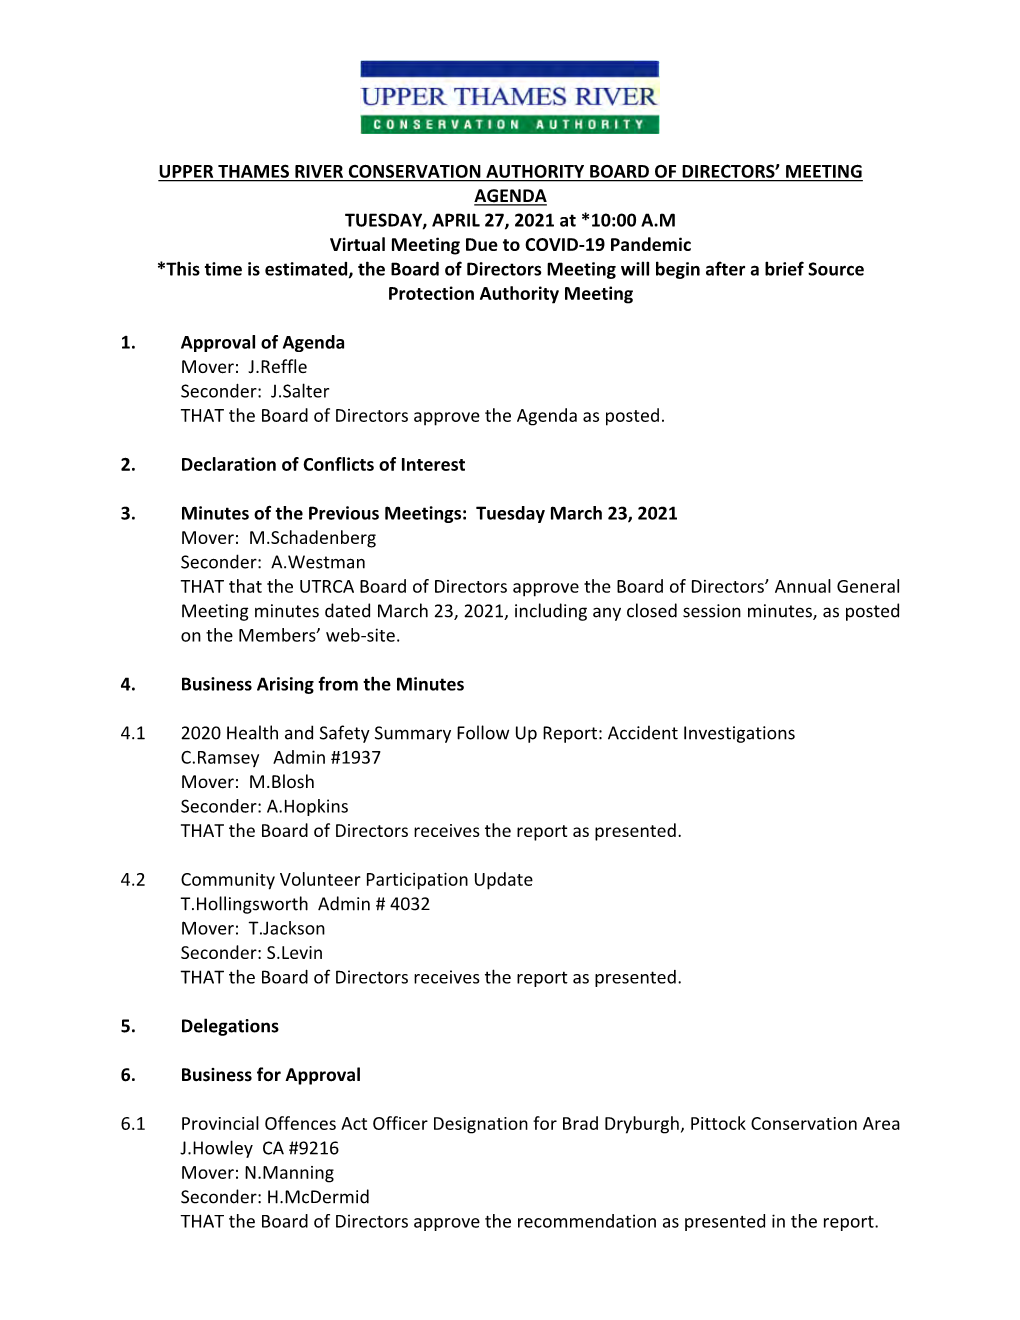 Board of Directors Meeting Agenda & Reports, April 27 2021